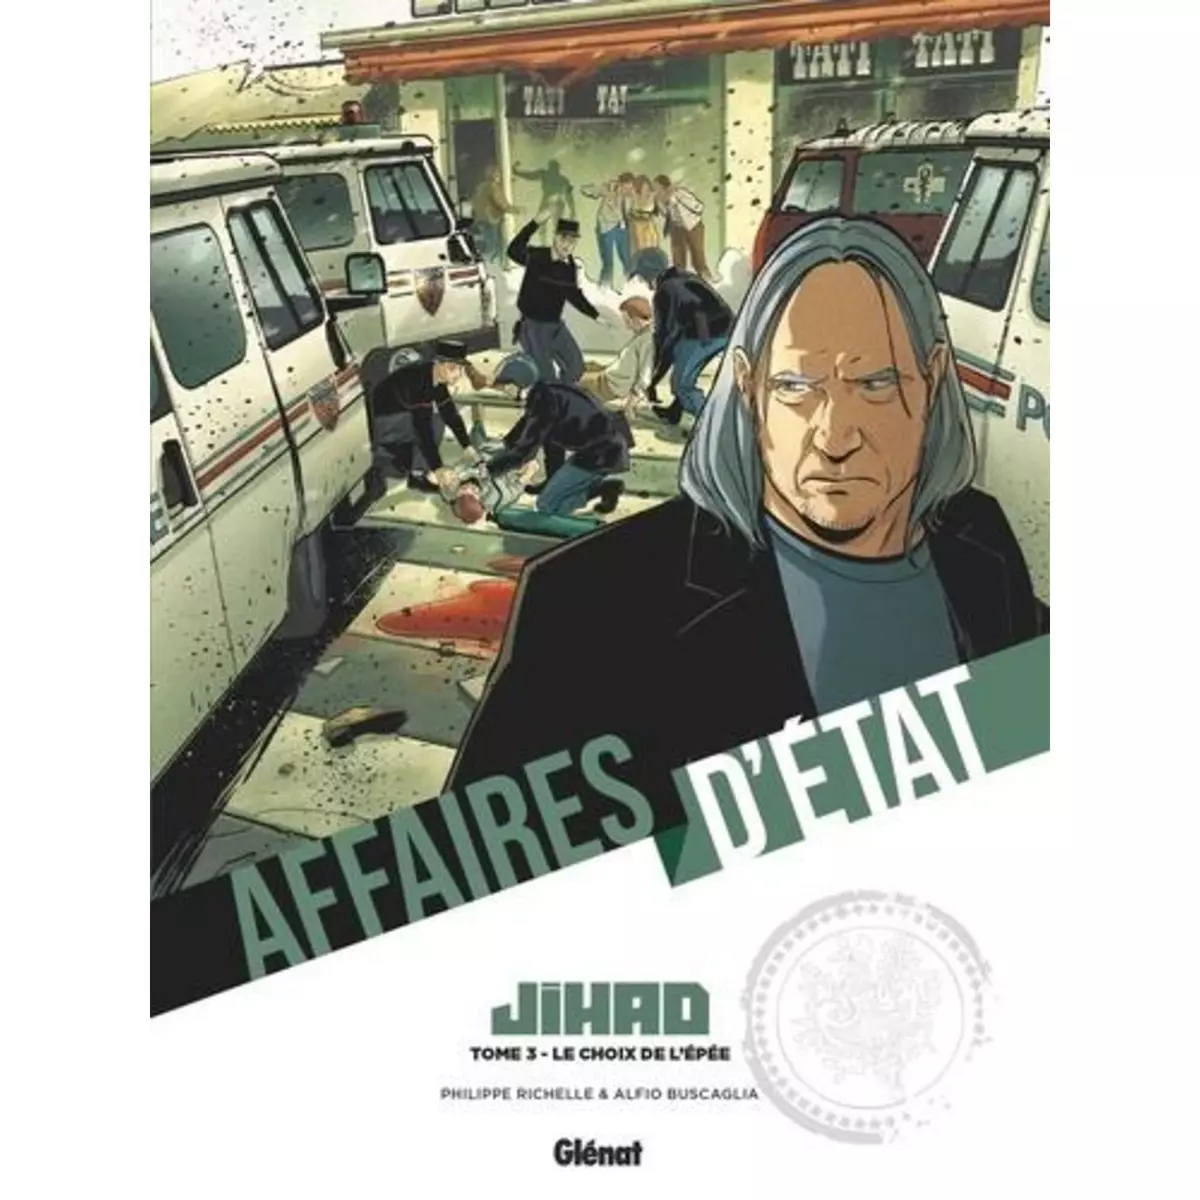  AFFAIRES D'ETAT - JIHAD TOME 3 : LE CHOIX DE L'EPEE, Buscaglia Alfio